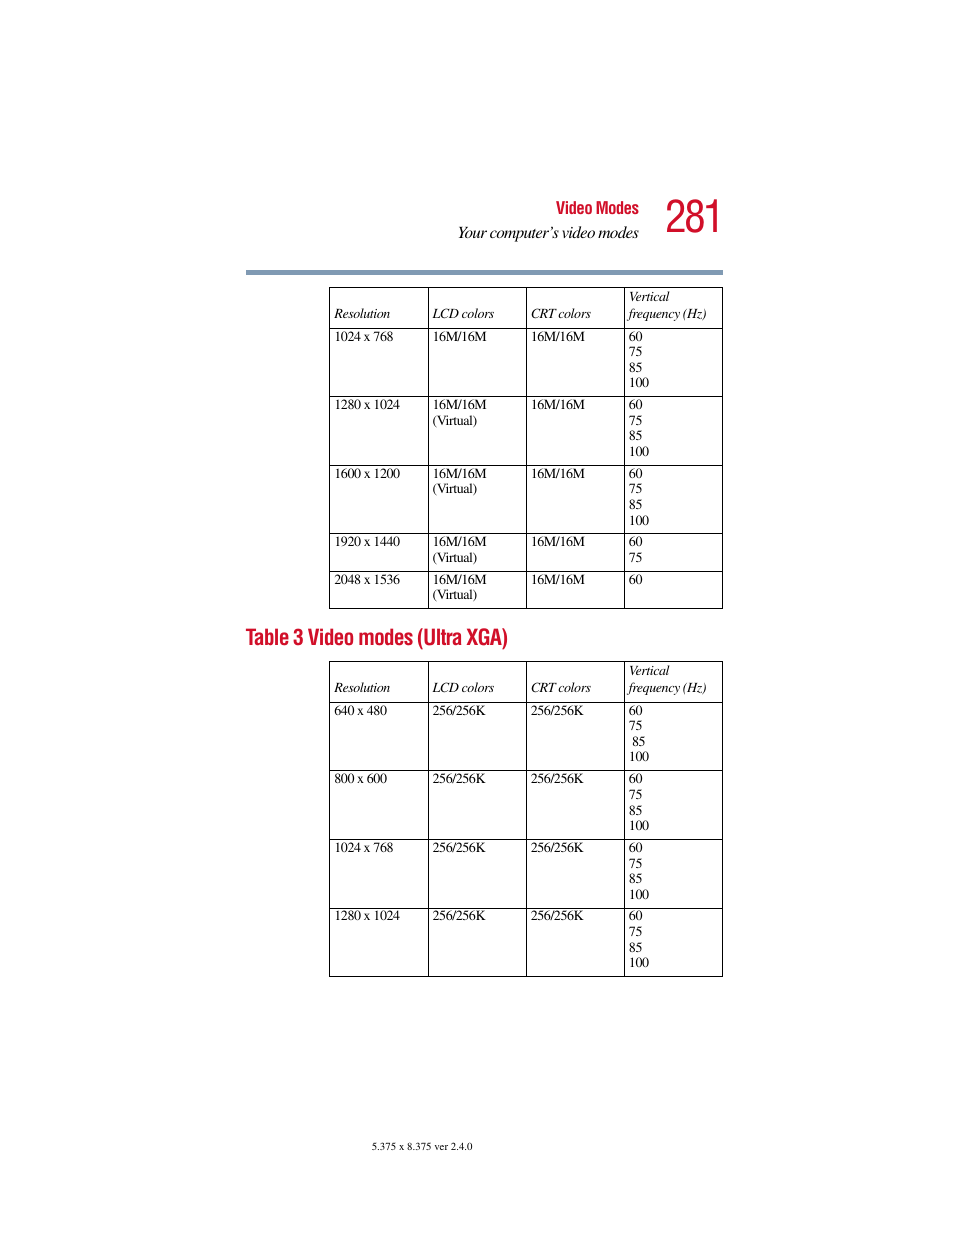 Table 3 video modes (ultra xga) | Toshiba Satellite 5205 Series User Manual | Page 281 / 312